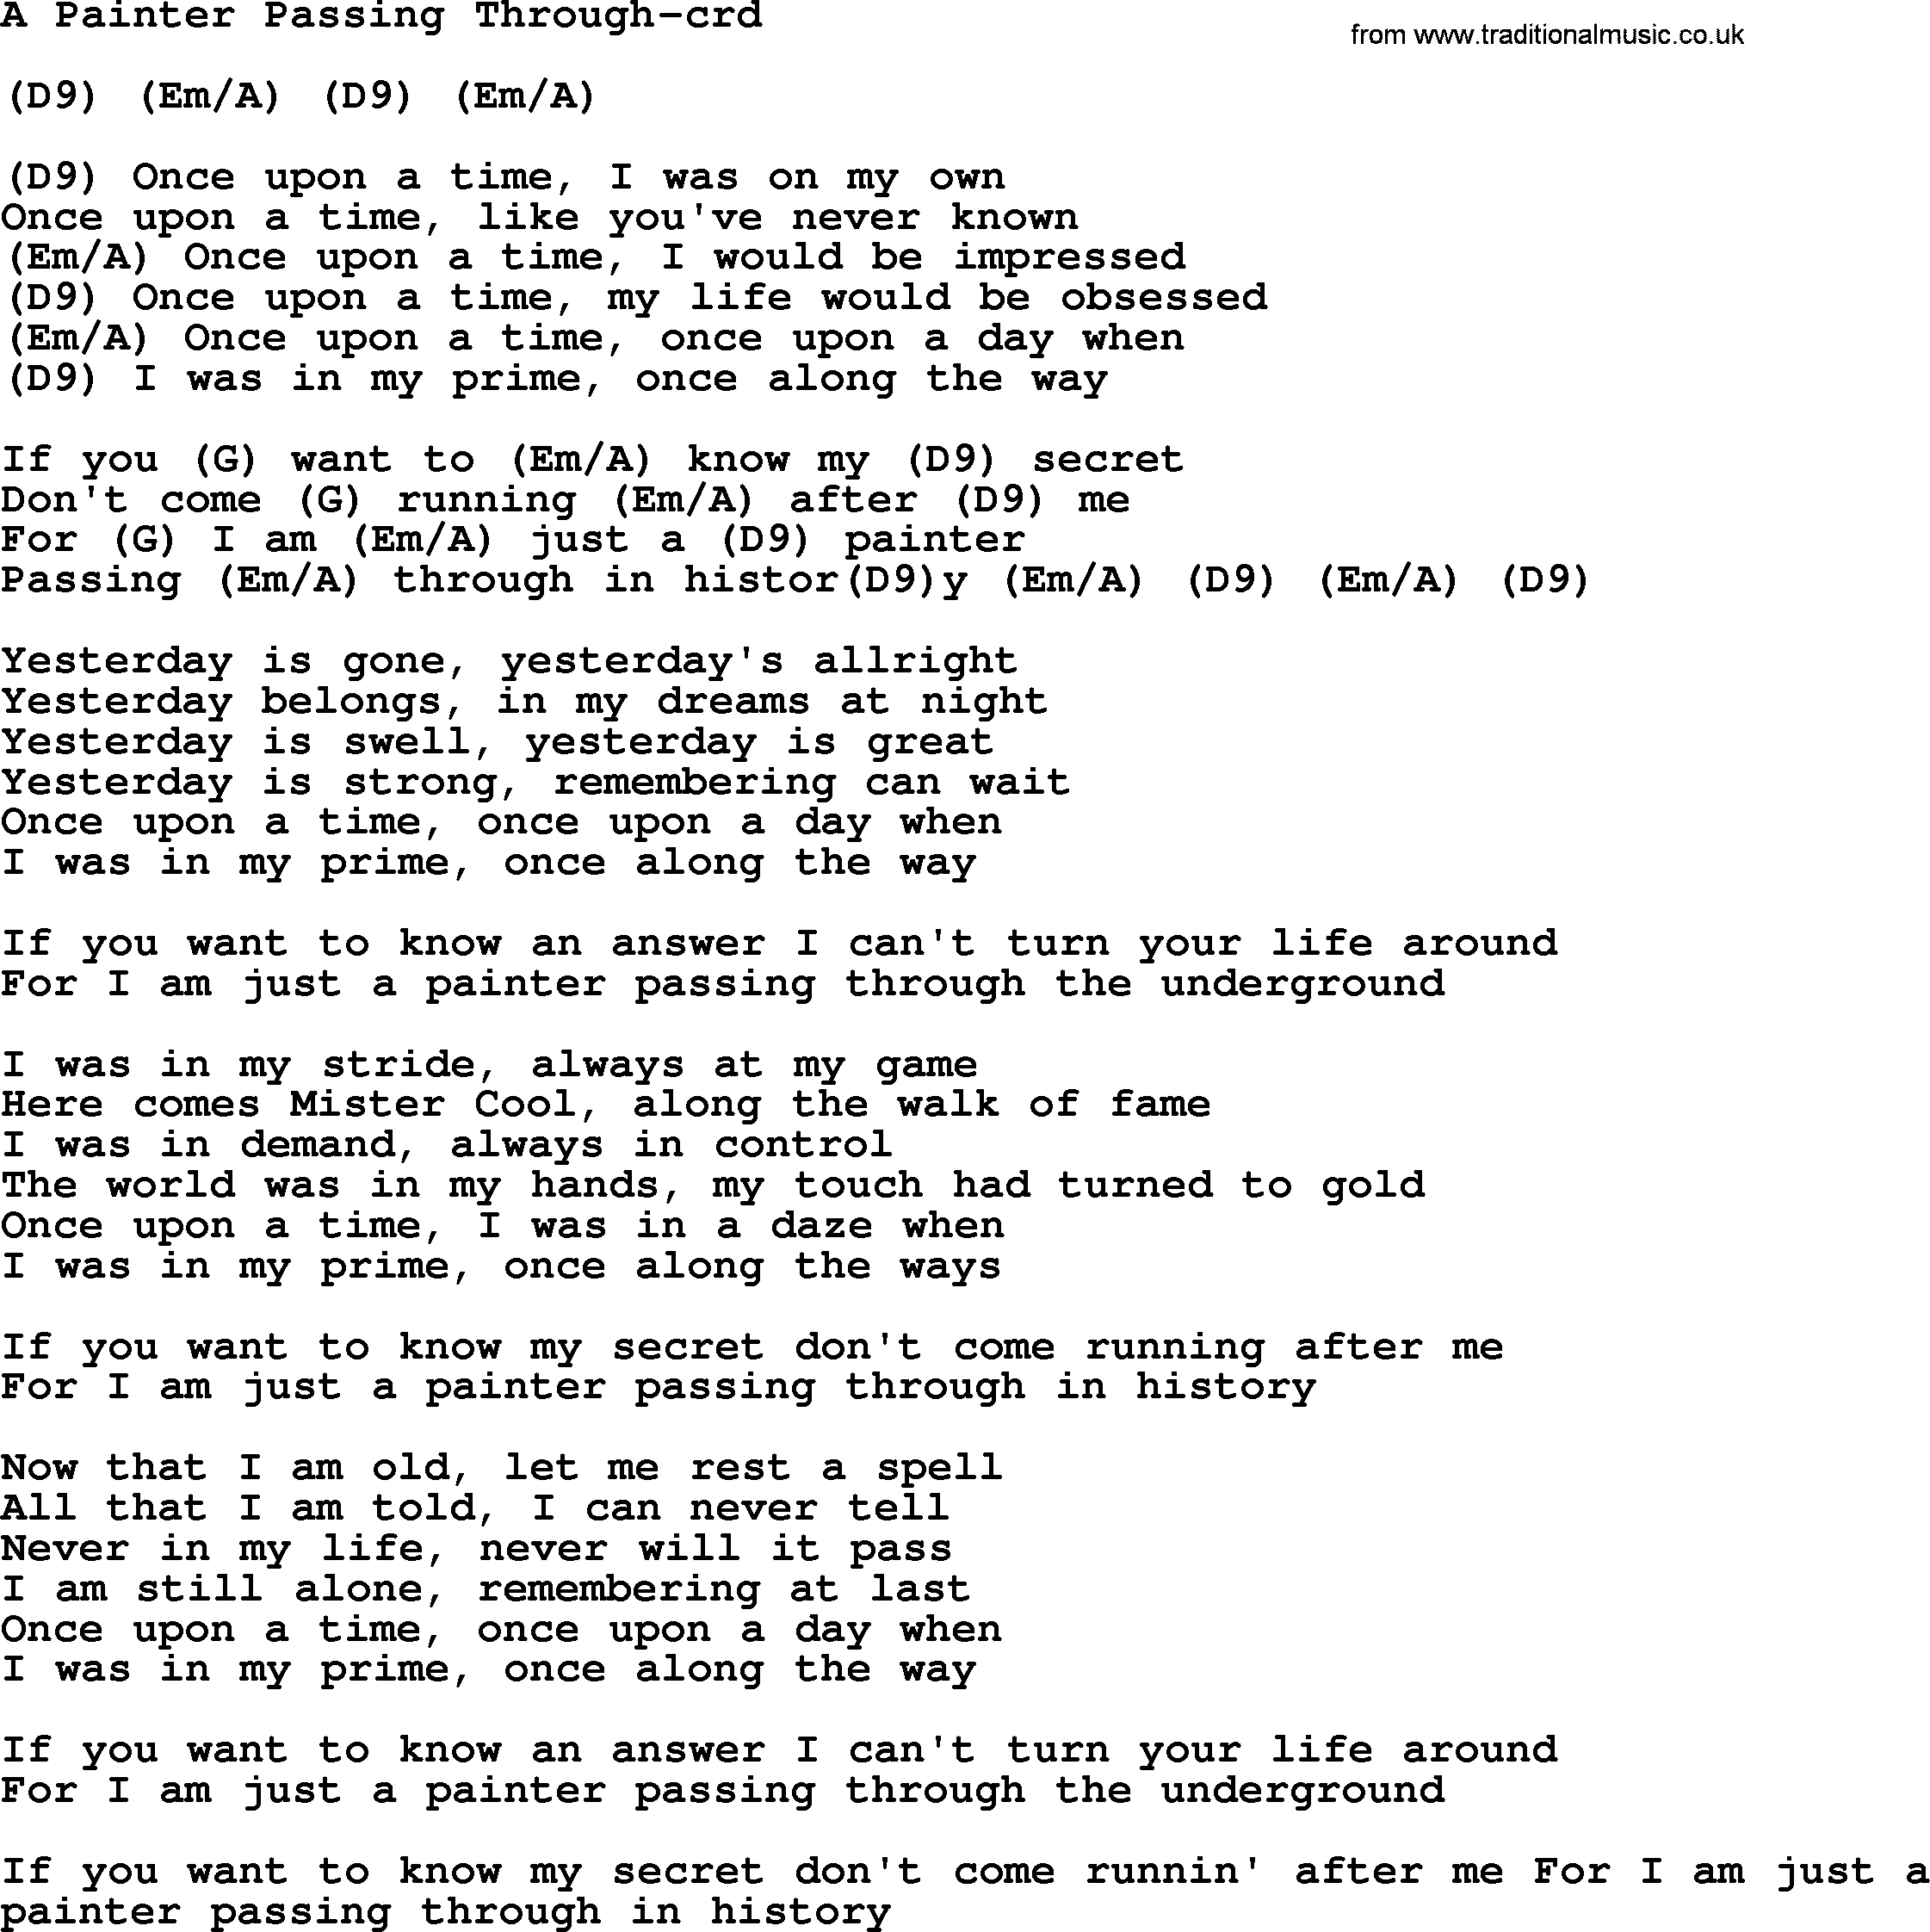 Gordon Lightfoot song A Painter Passing Through, lyrics and chords